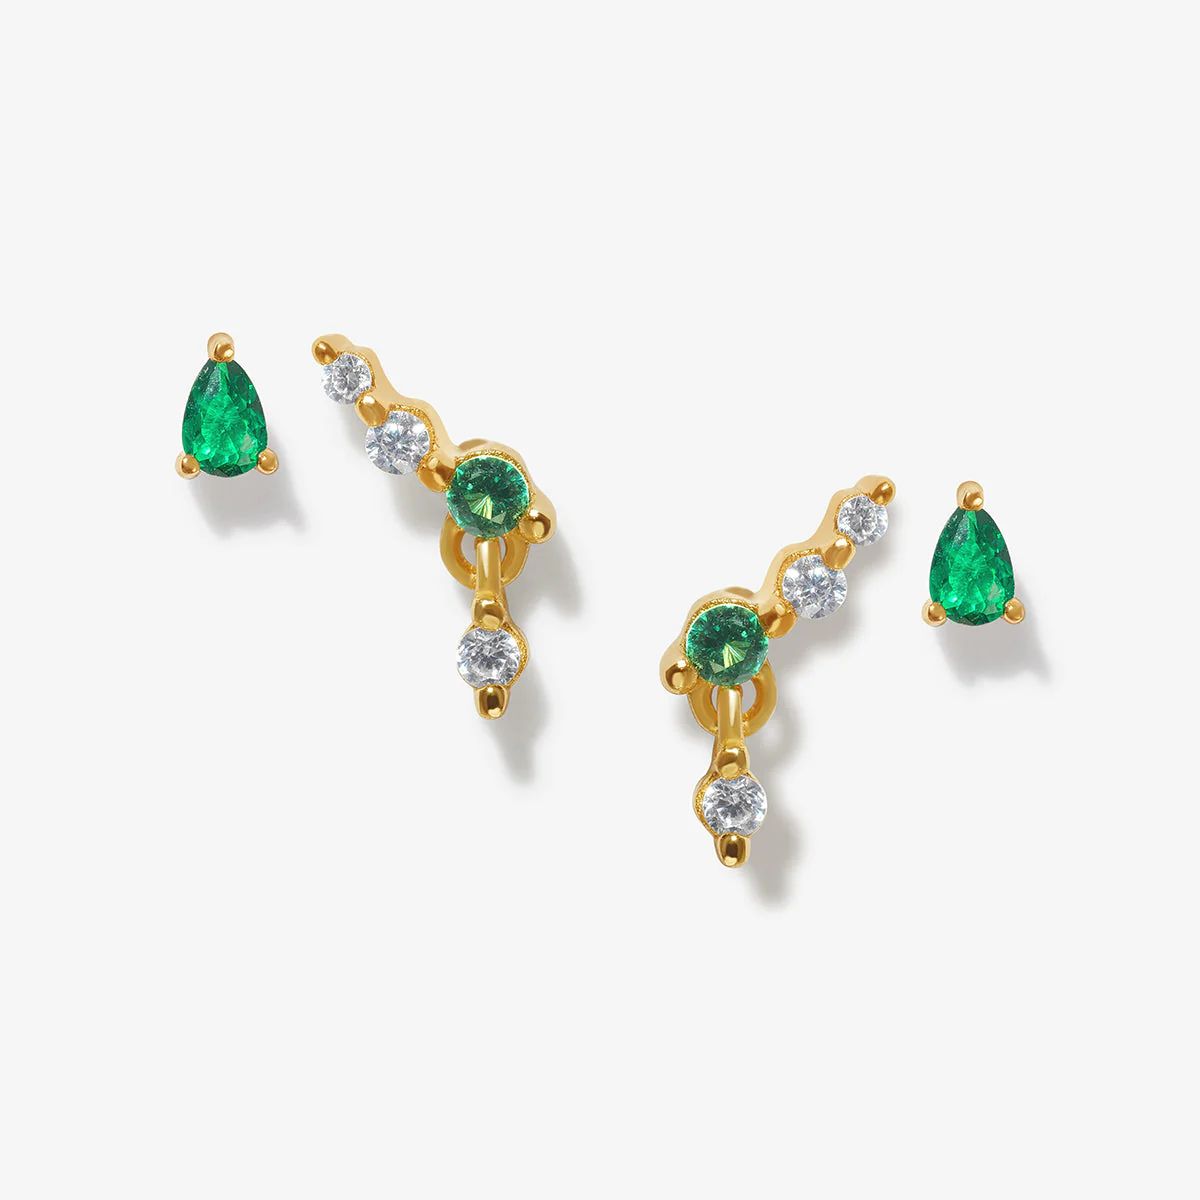 Sams emerald earring set | Adornmonde